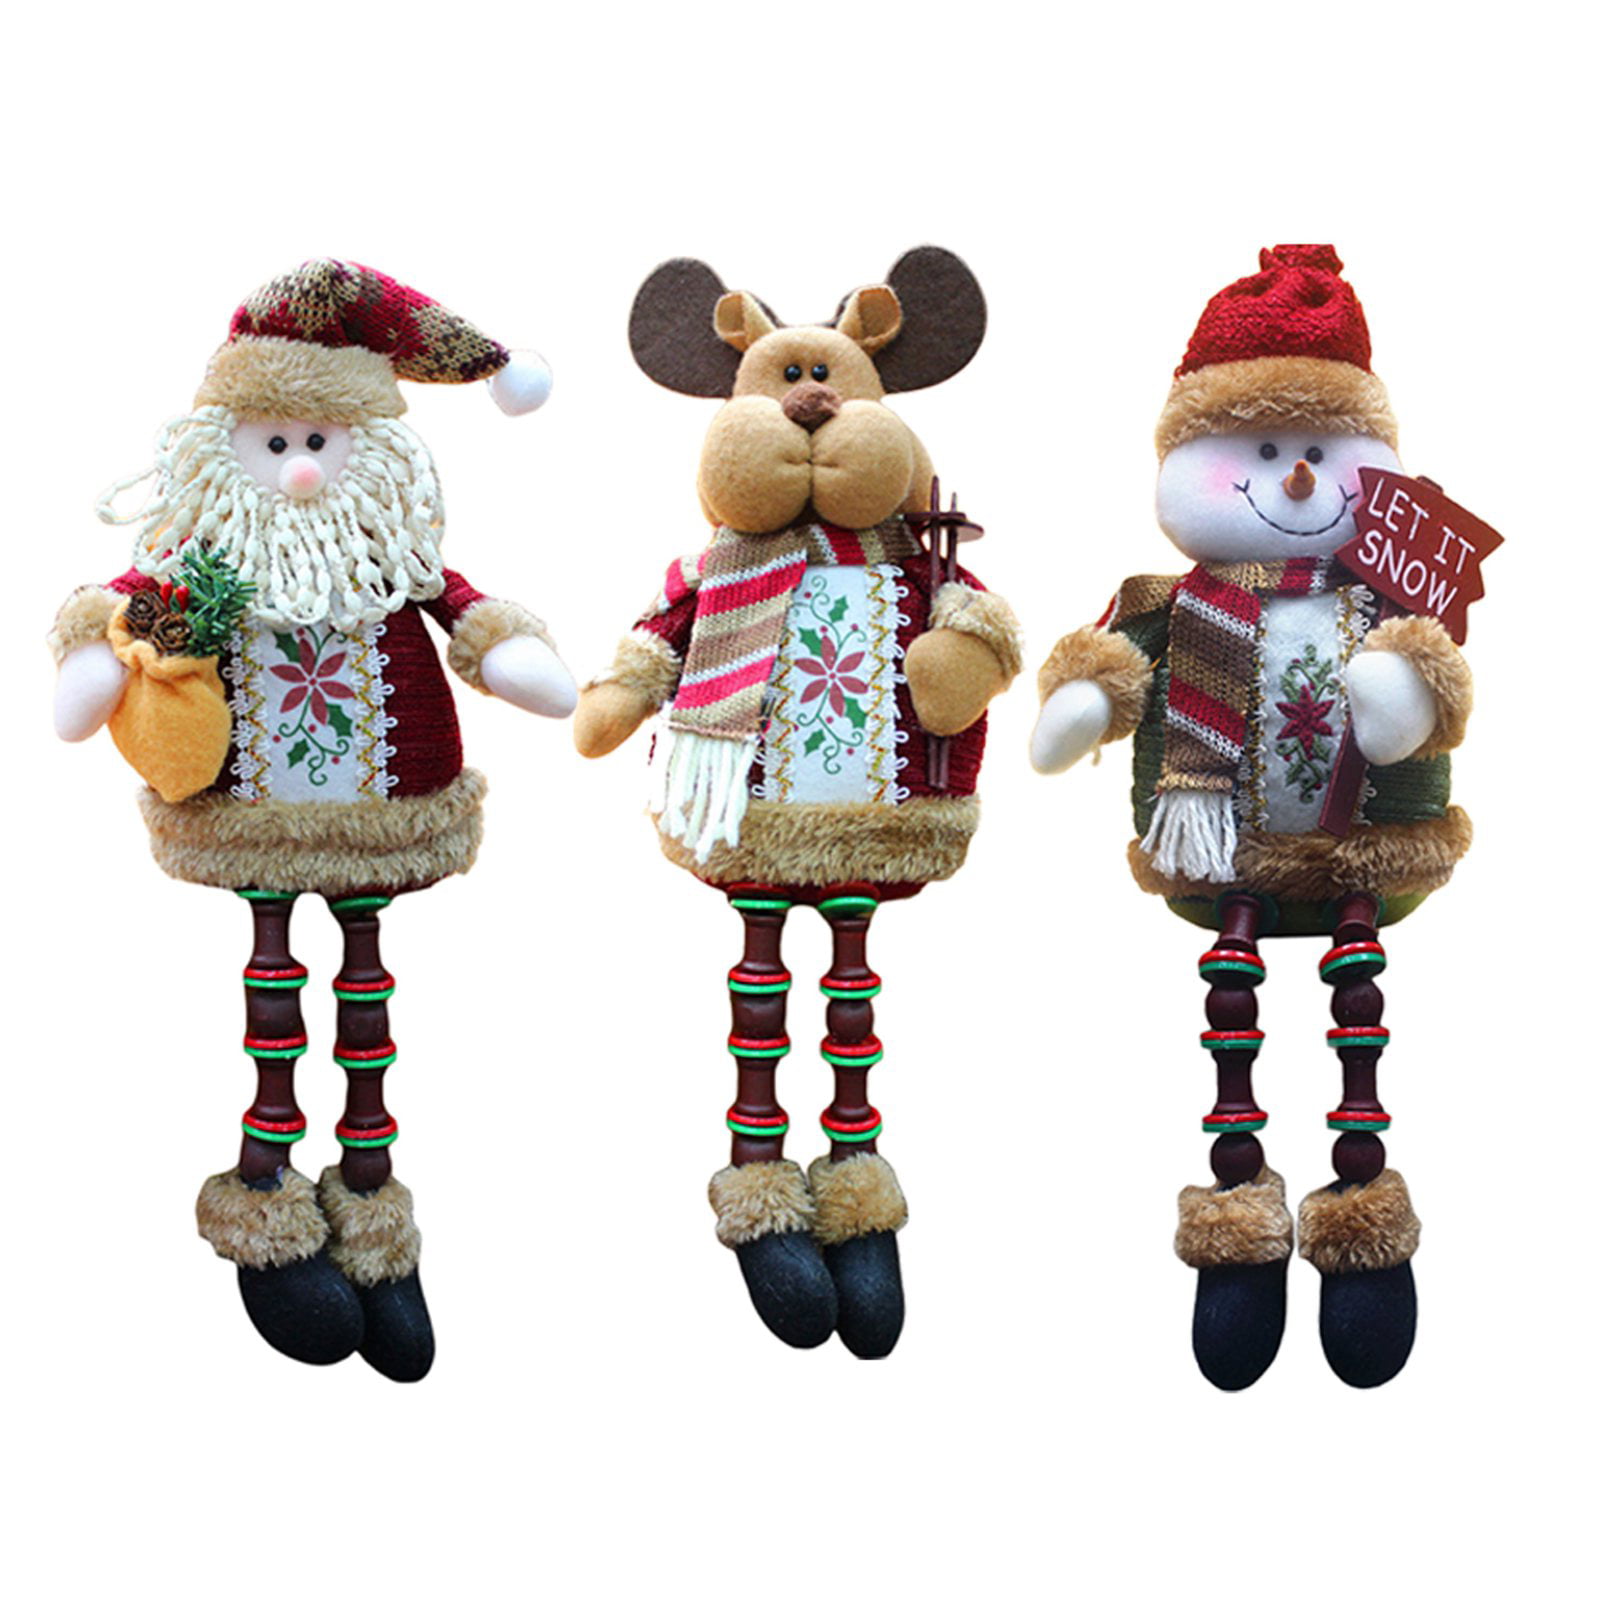 Christmas Santa Claus Snowman Elk Ornament Party Xmas Home Table Decor Doll Gift 